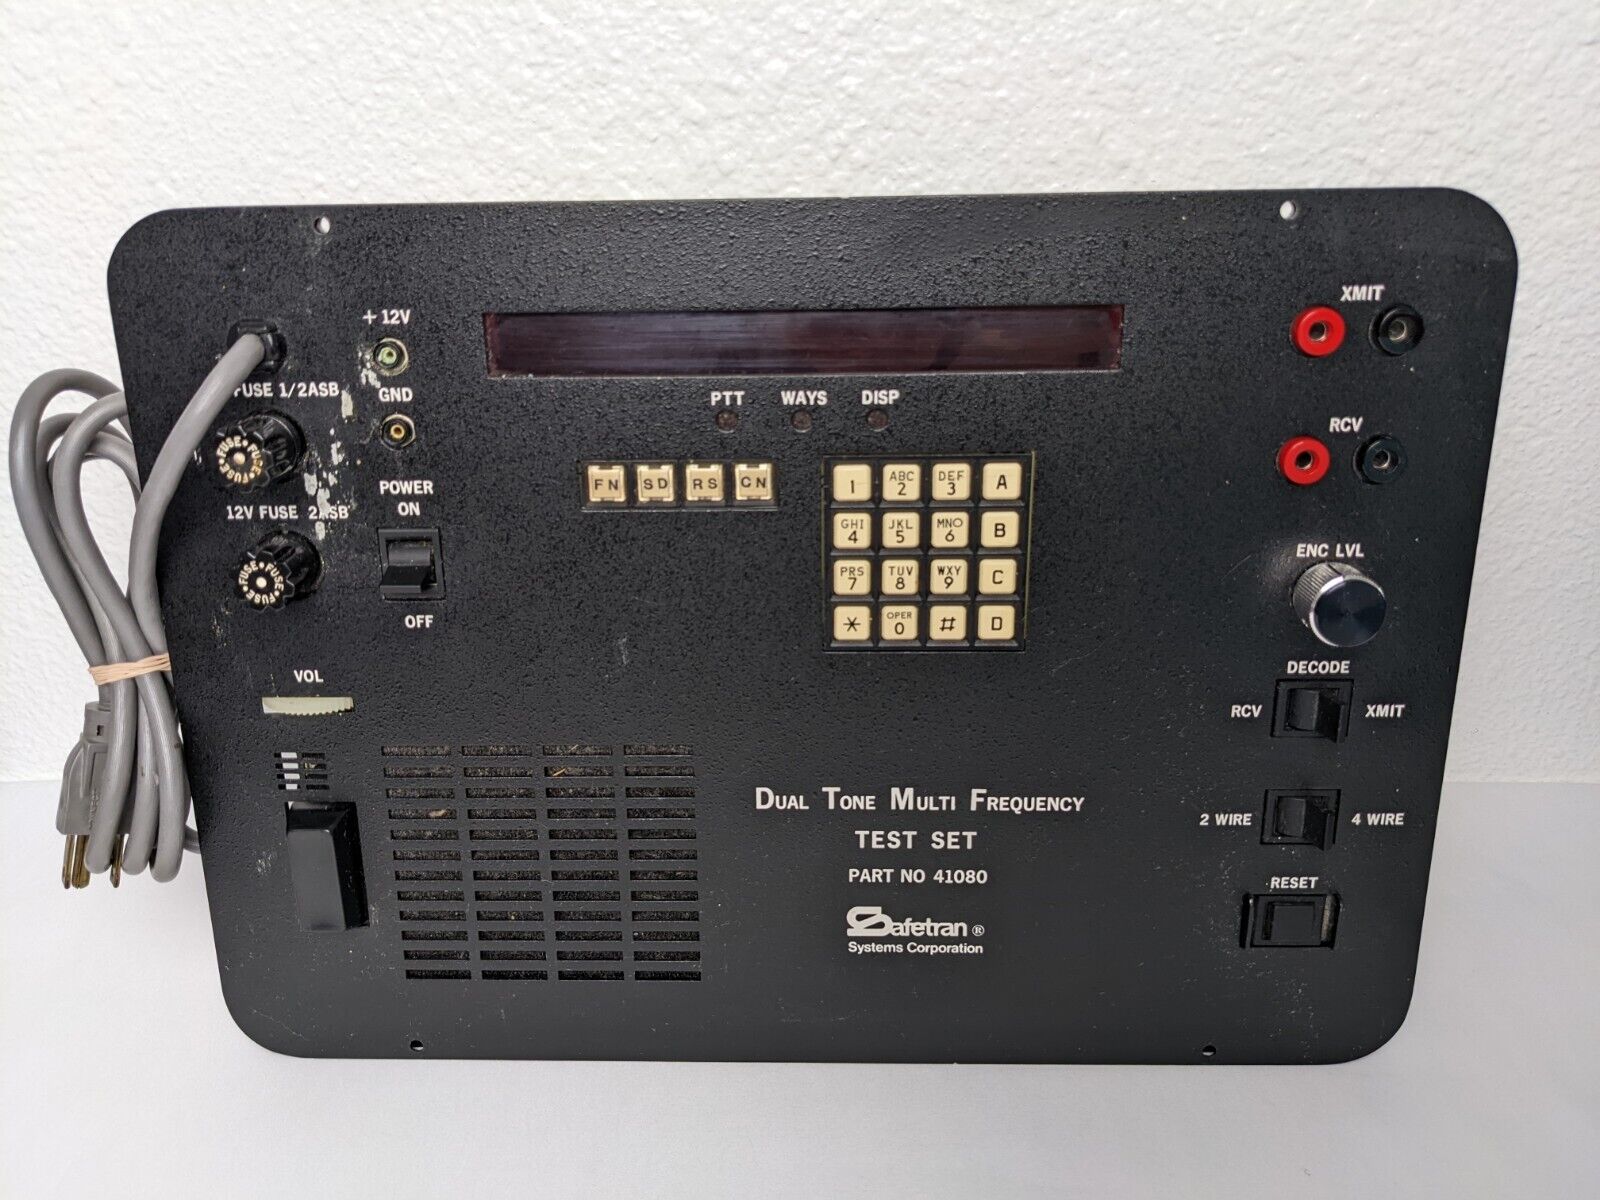 Rare Vtg Safetran Railroad Signal Control DTMF Test Set 41080 *AS-IS FOR REPAIR*